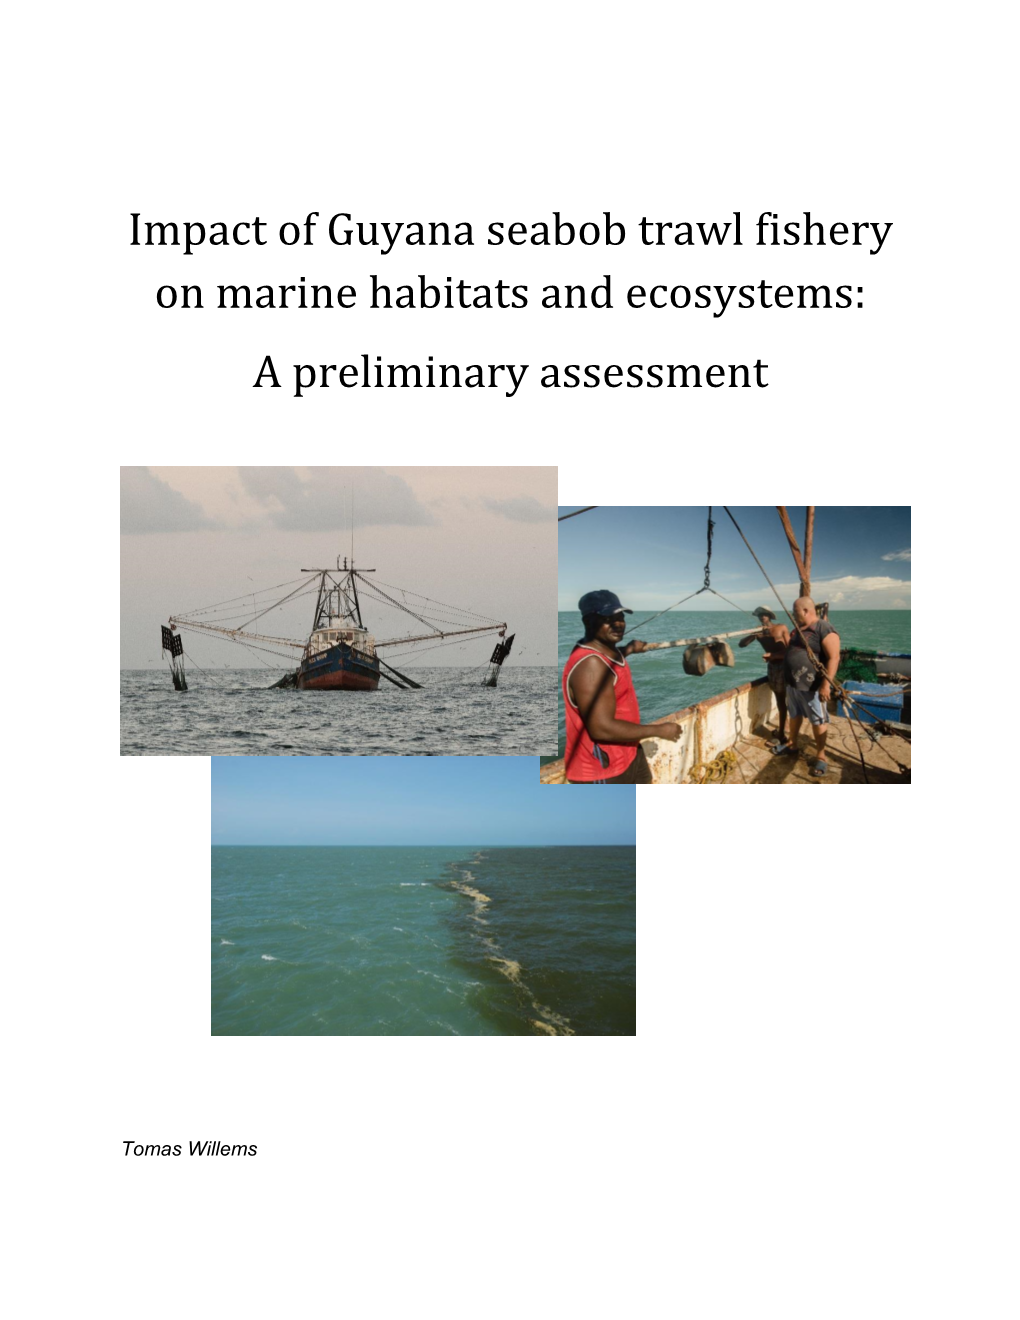 Impact of Guyana Seabob Trawl Fishery on Marine Habitats and Ecosystems: a Preliminary Assessment